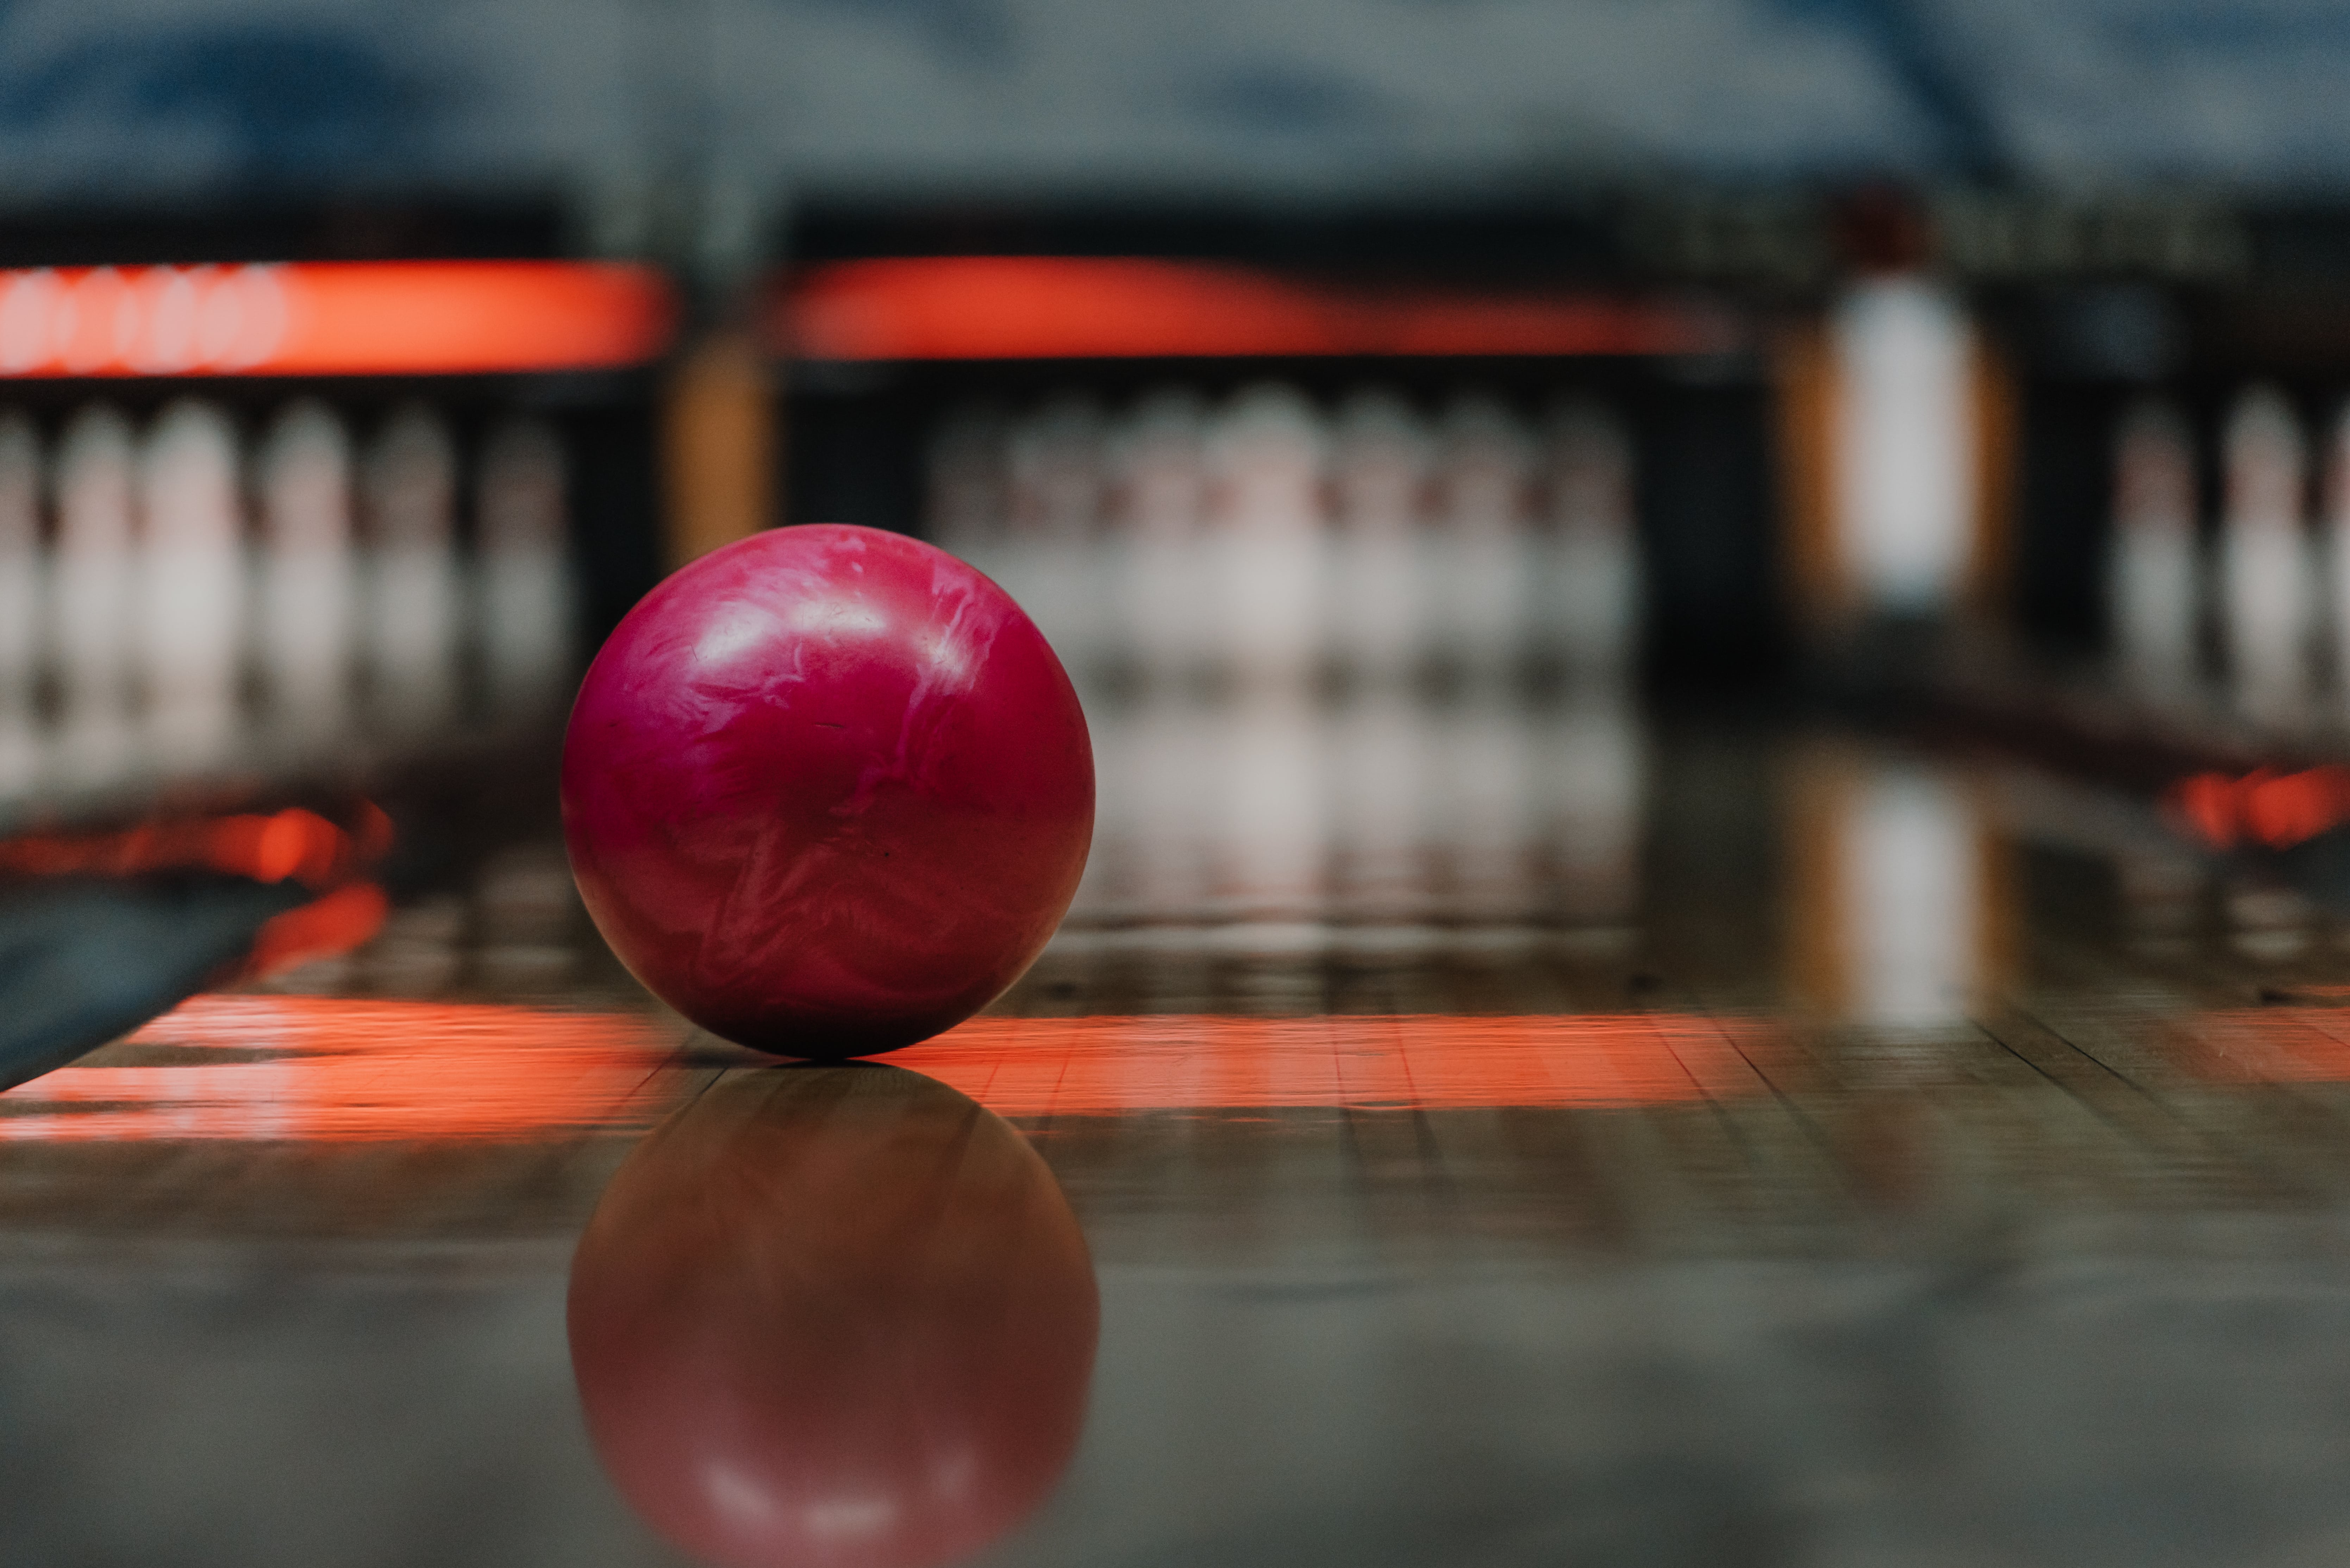 Berapa berat bola bowling?